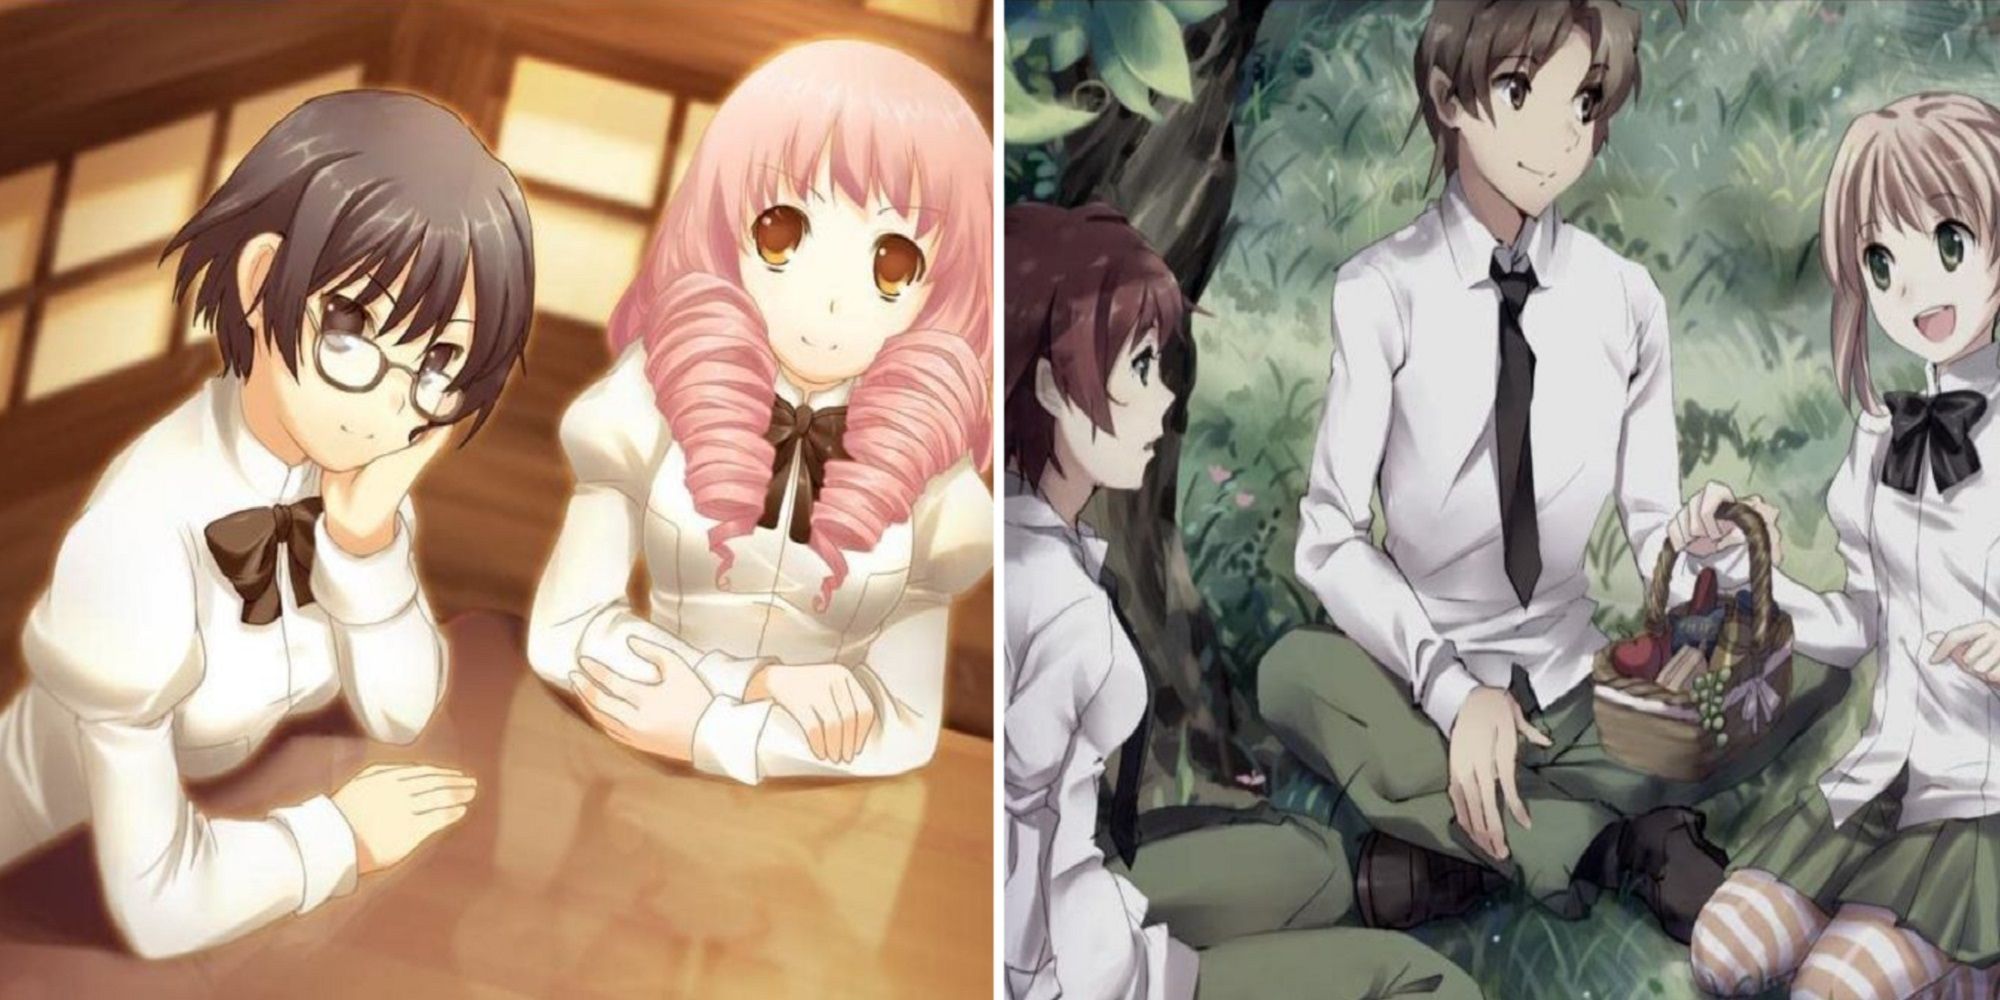 Shizune And Misha Sitting At A Table And Rin, Hisao, And Emi Having a Picnic By A Tree